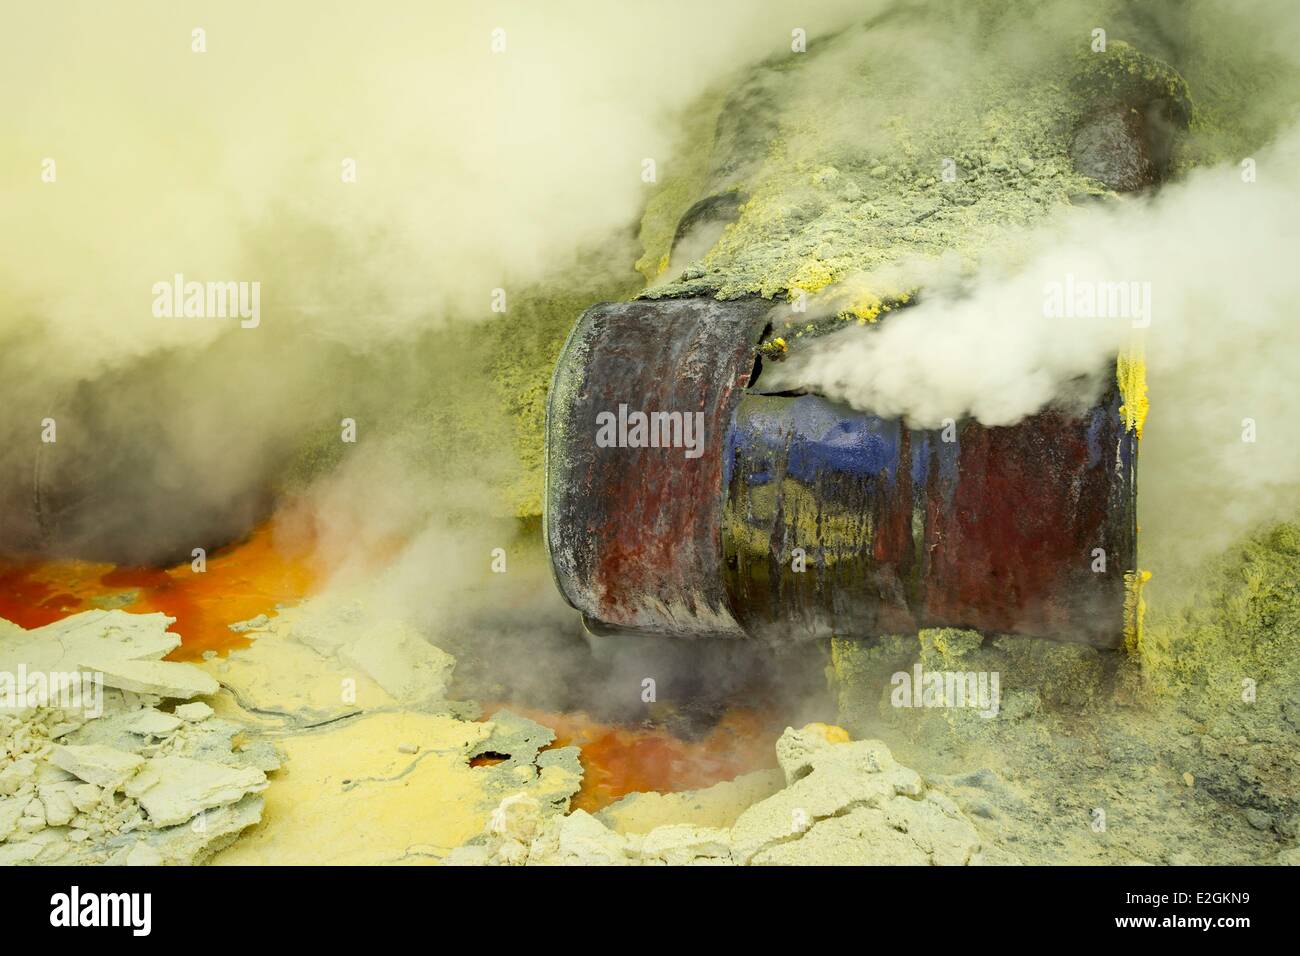 Indonesia Java Island East Java province Mining Sulfur in Kawah Ijen volcano (2500m) Stock Photo